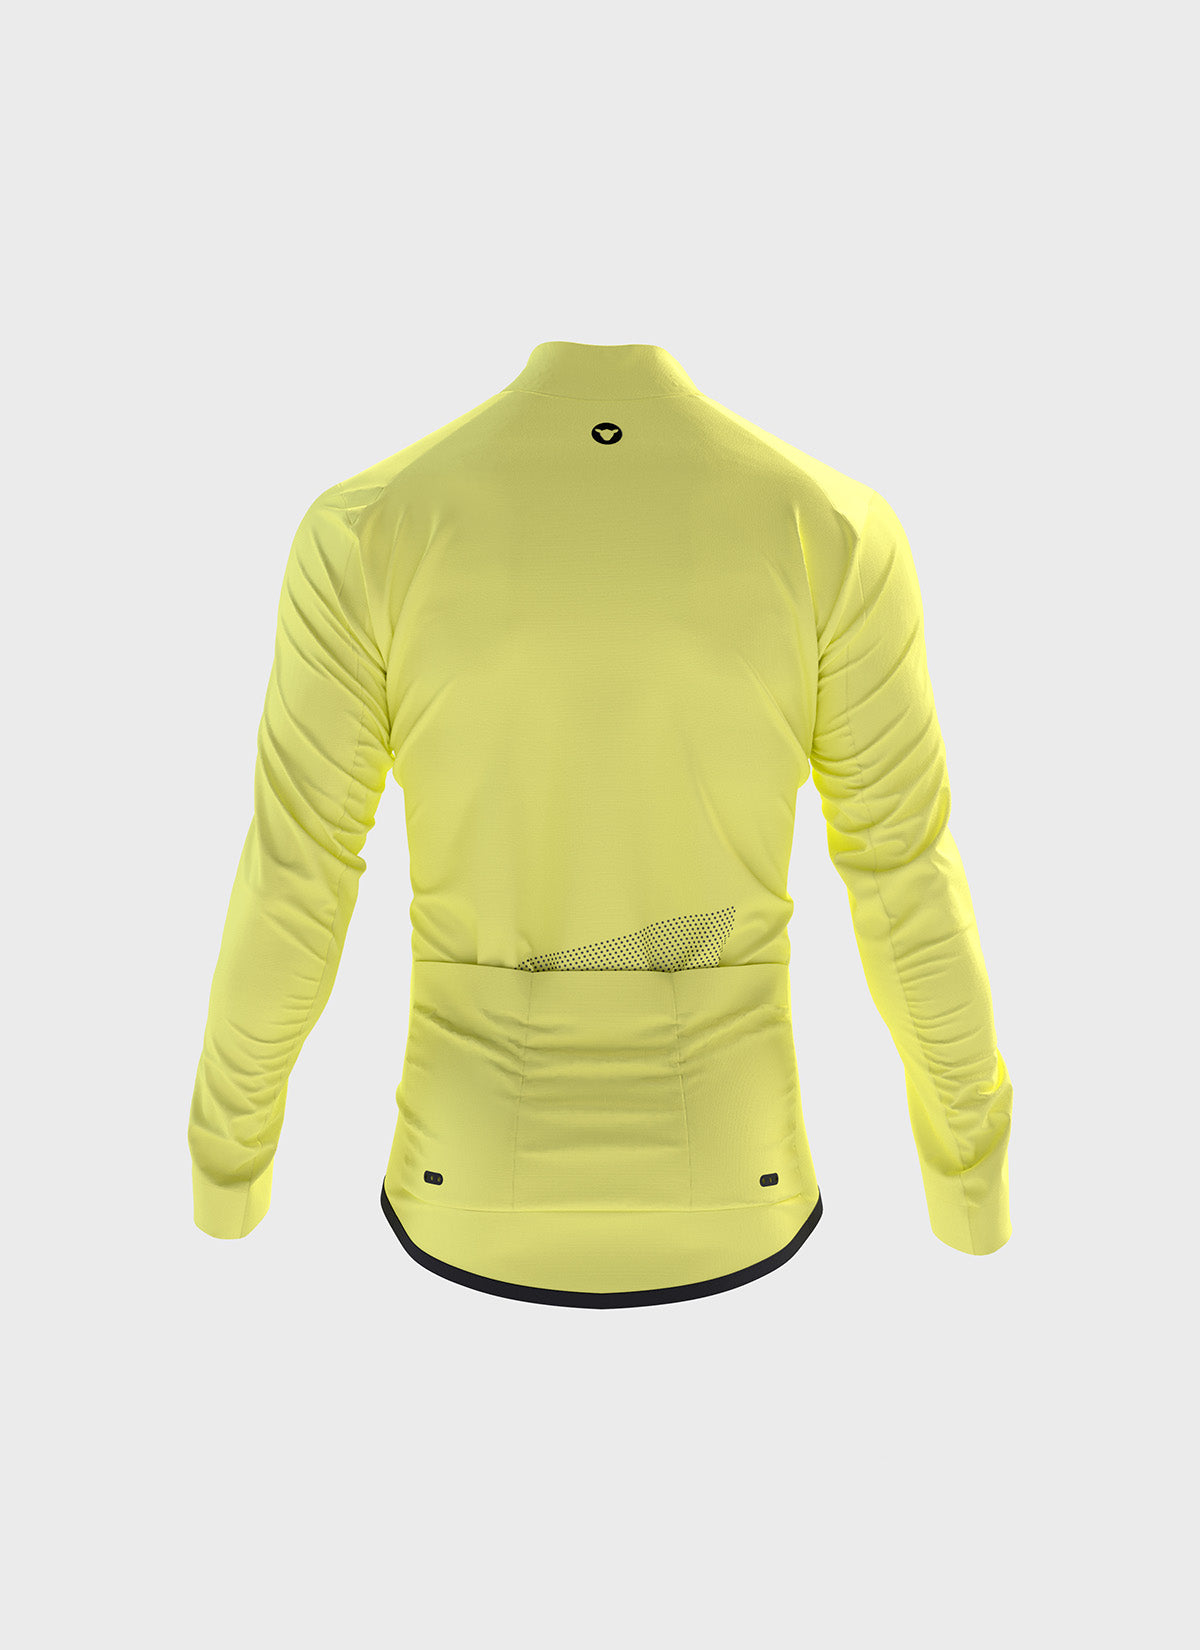 Men's Elements Micro Jacket - Yellow